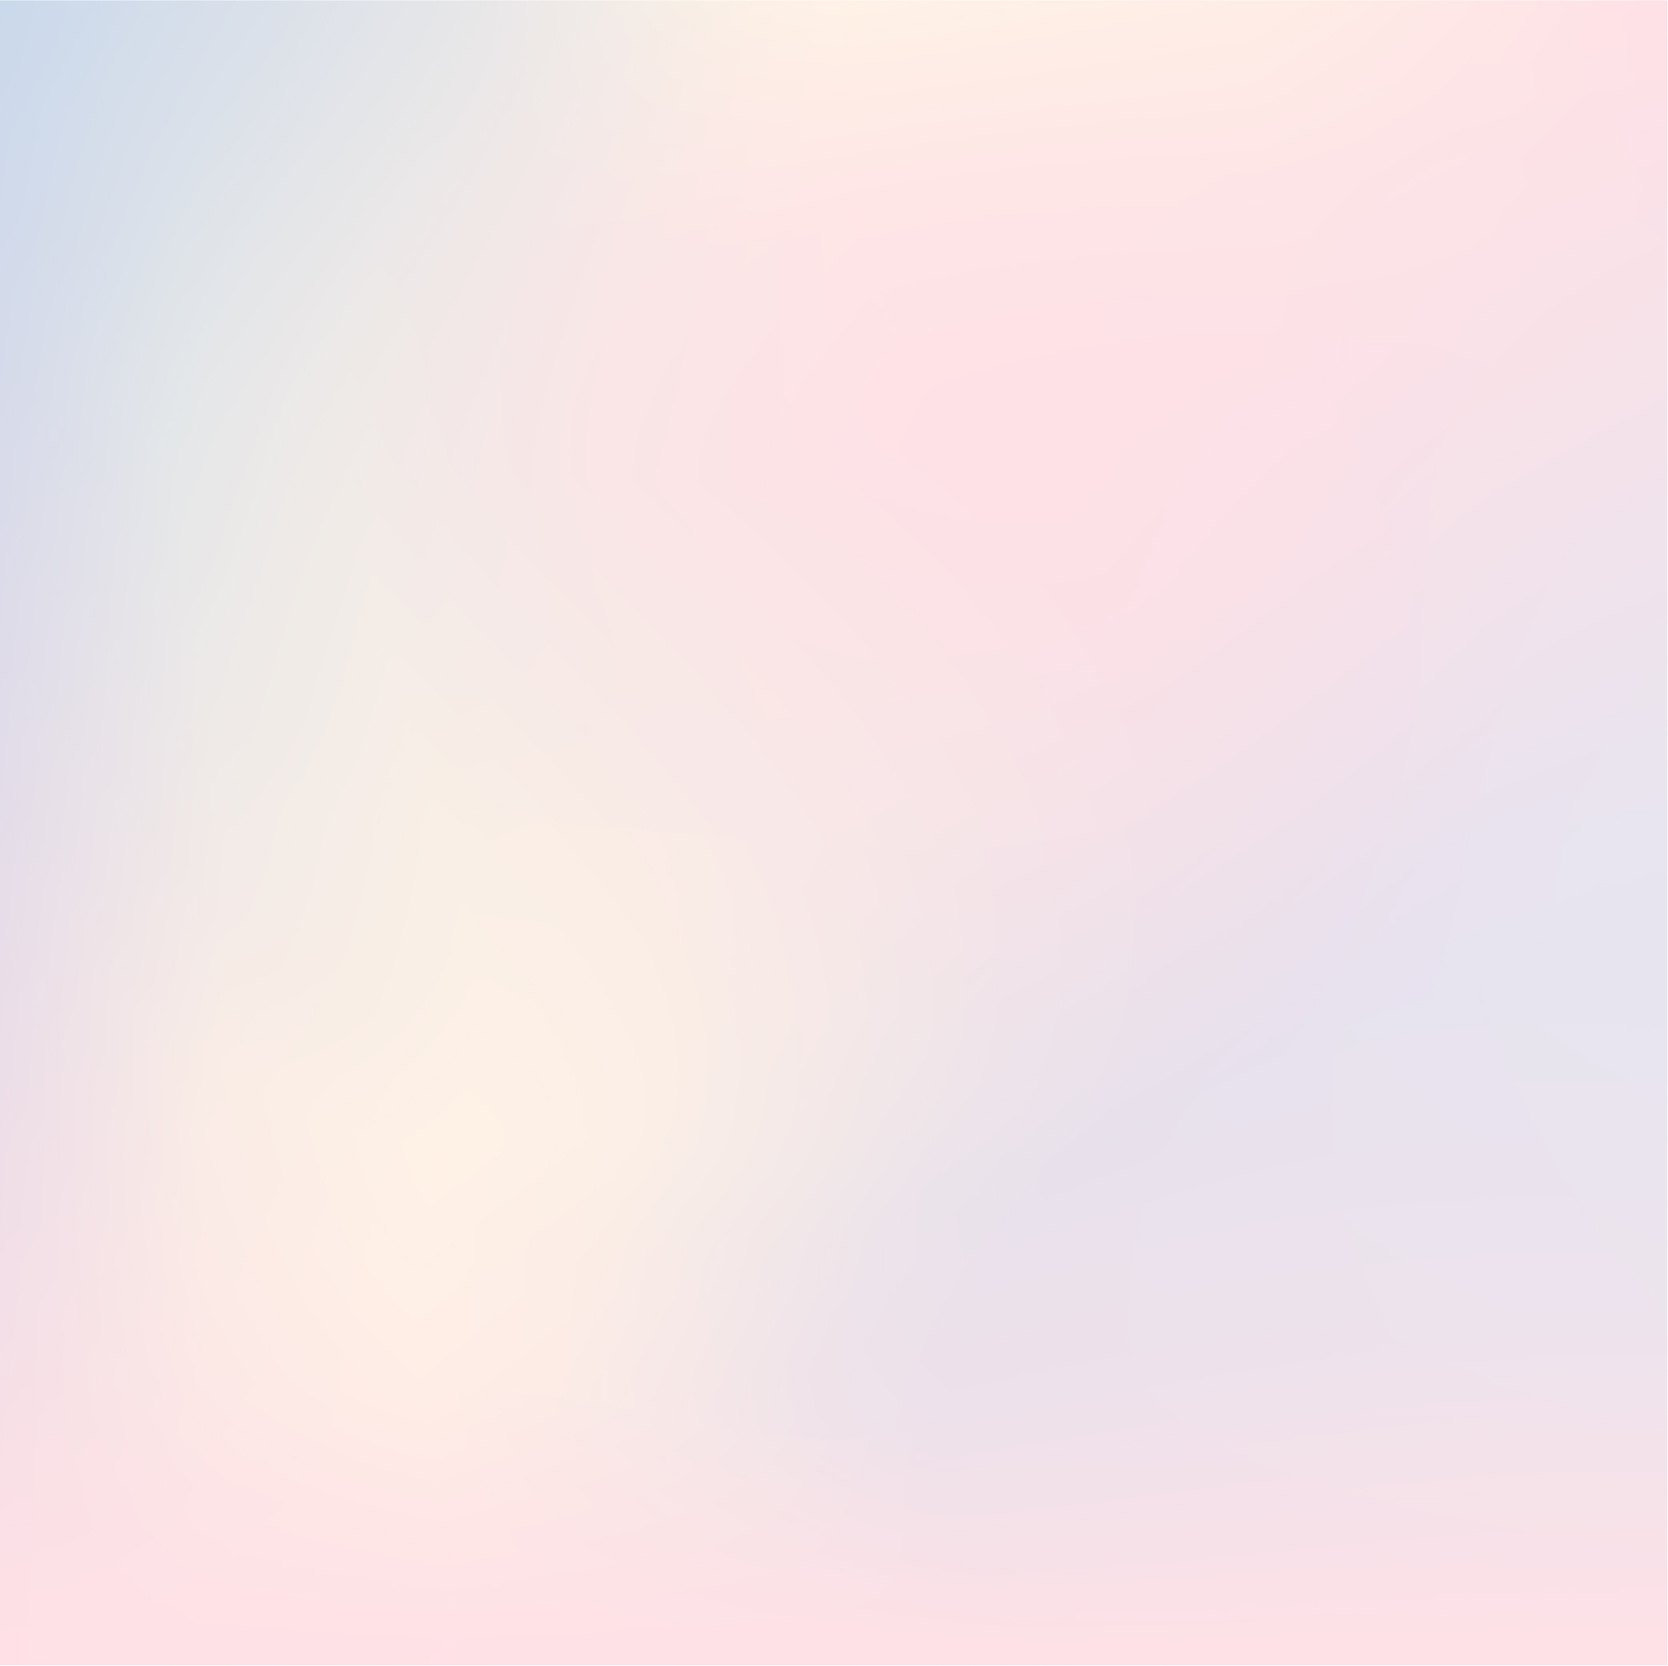 Mesh gradient background pastels pink